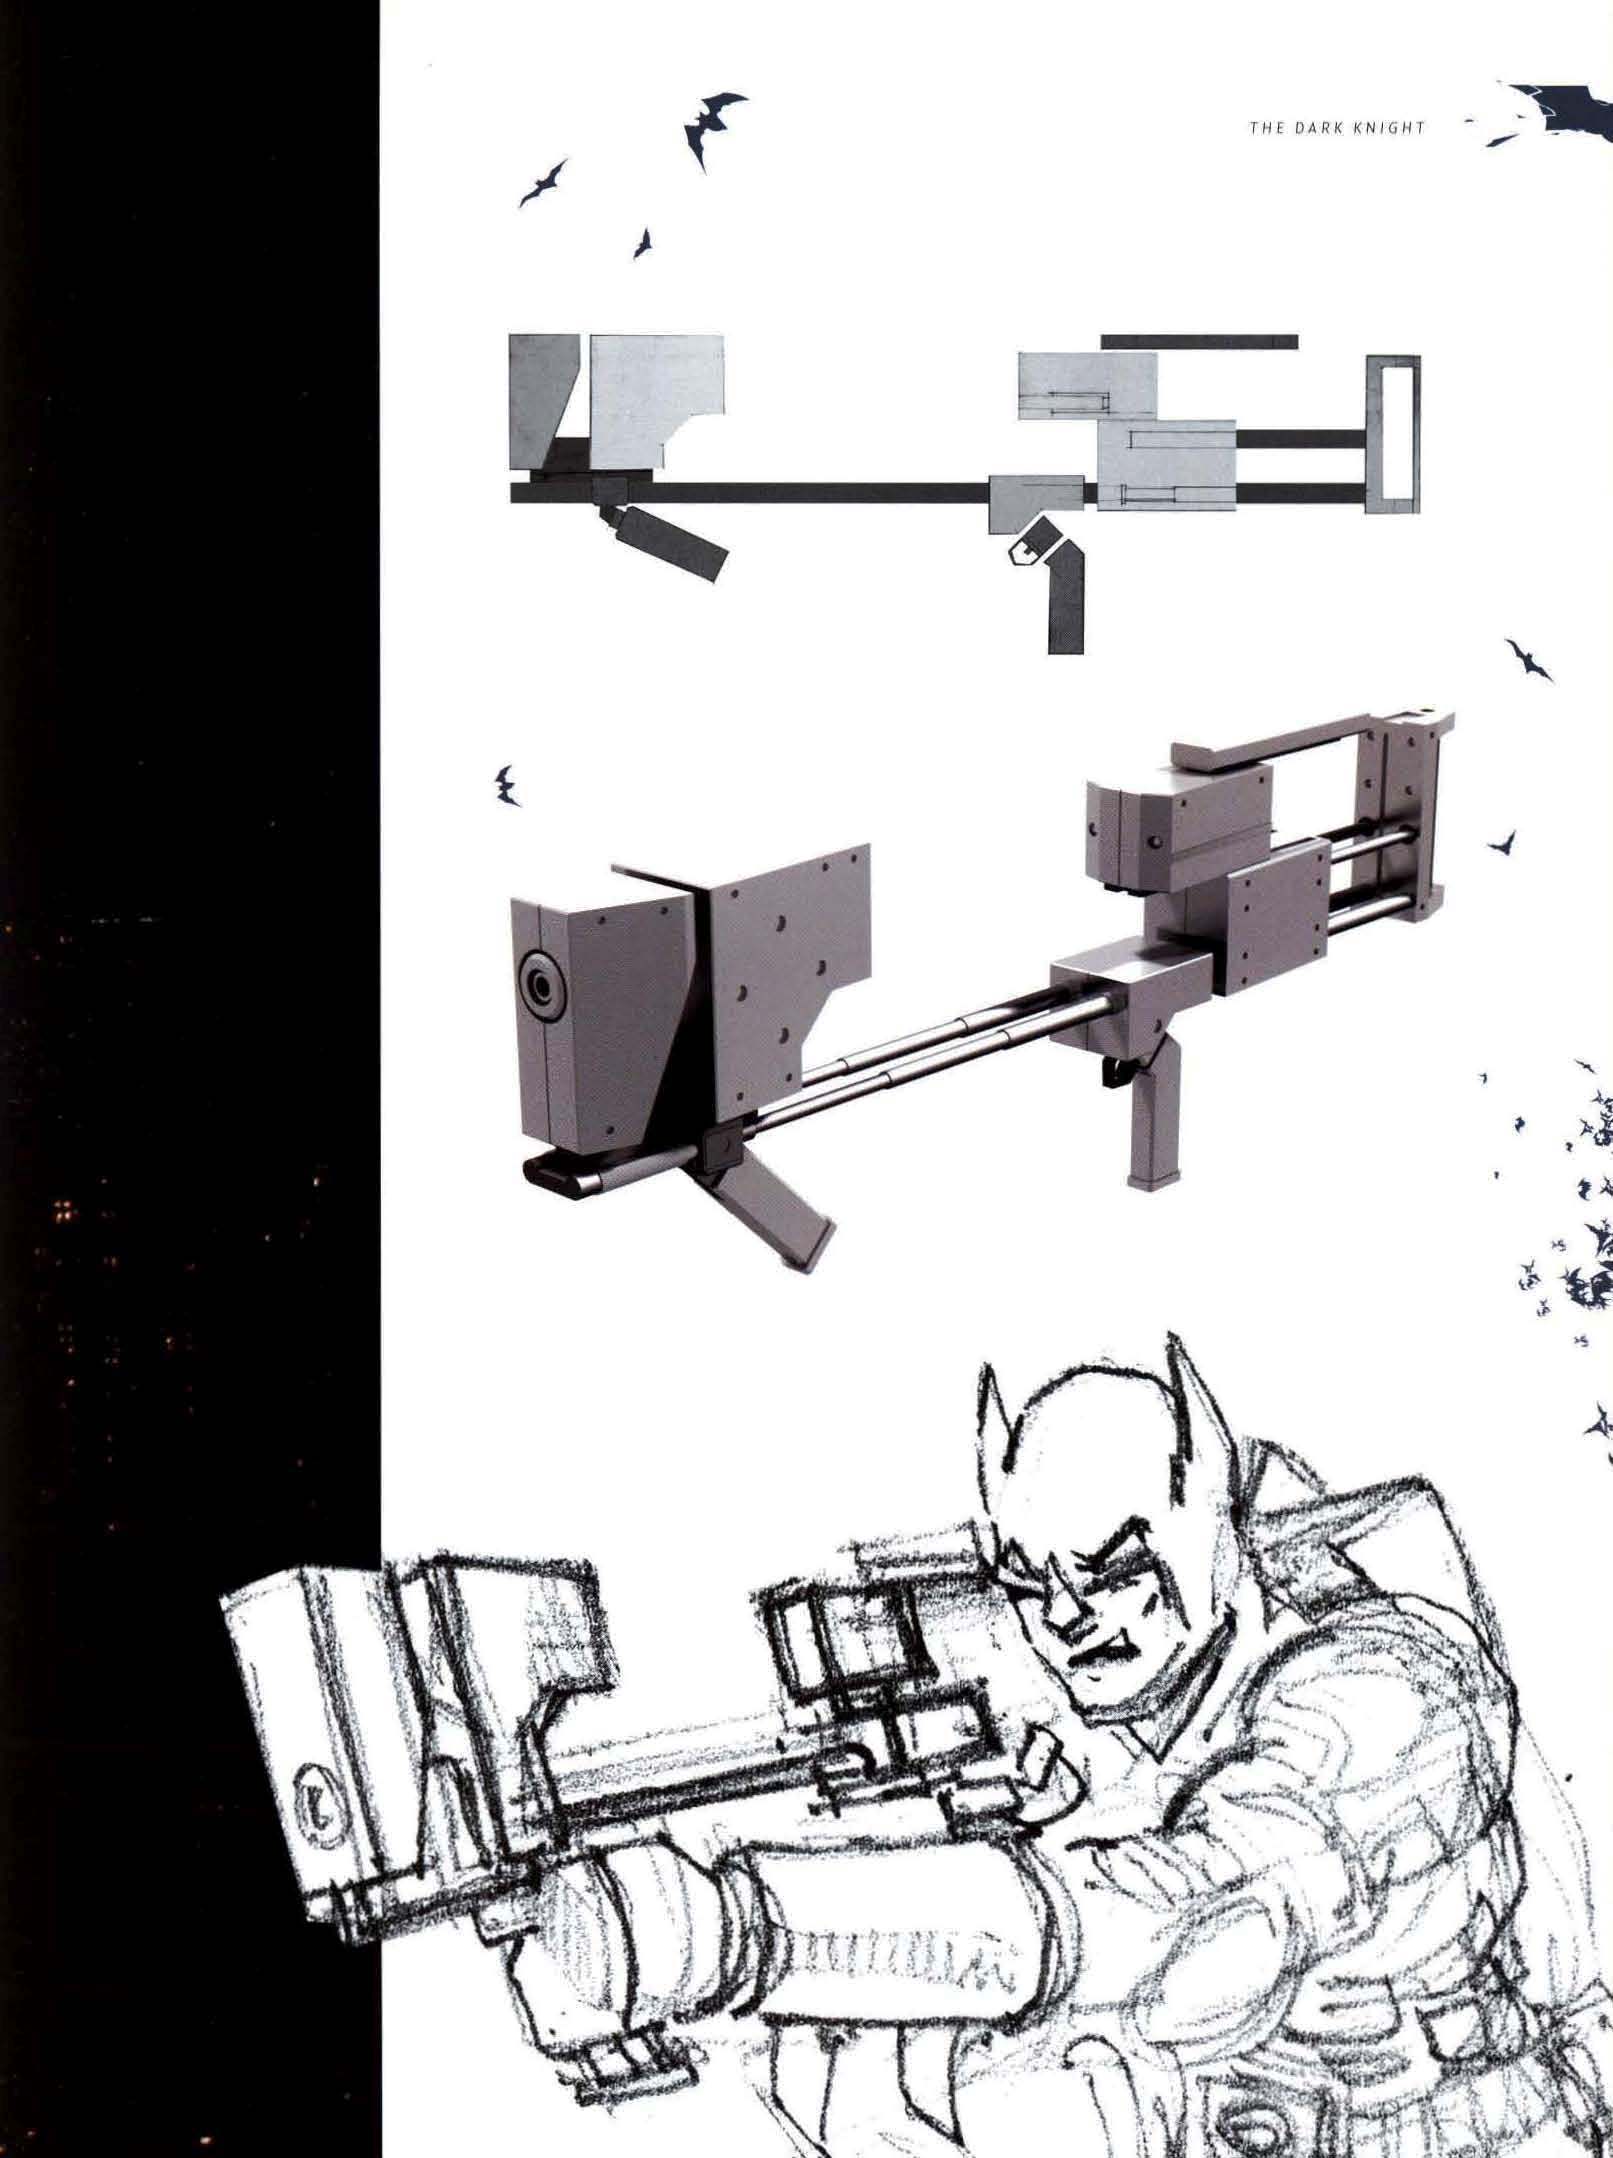 The Dark Knight Featuring Production Art &amp; Full Shooting Script (2008)-022.jpg